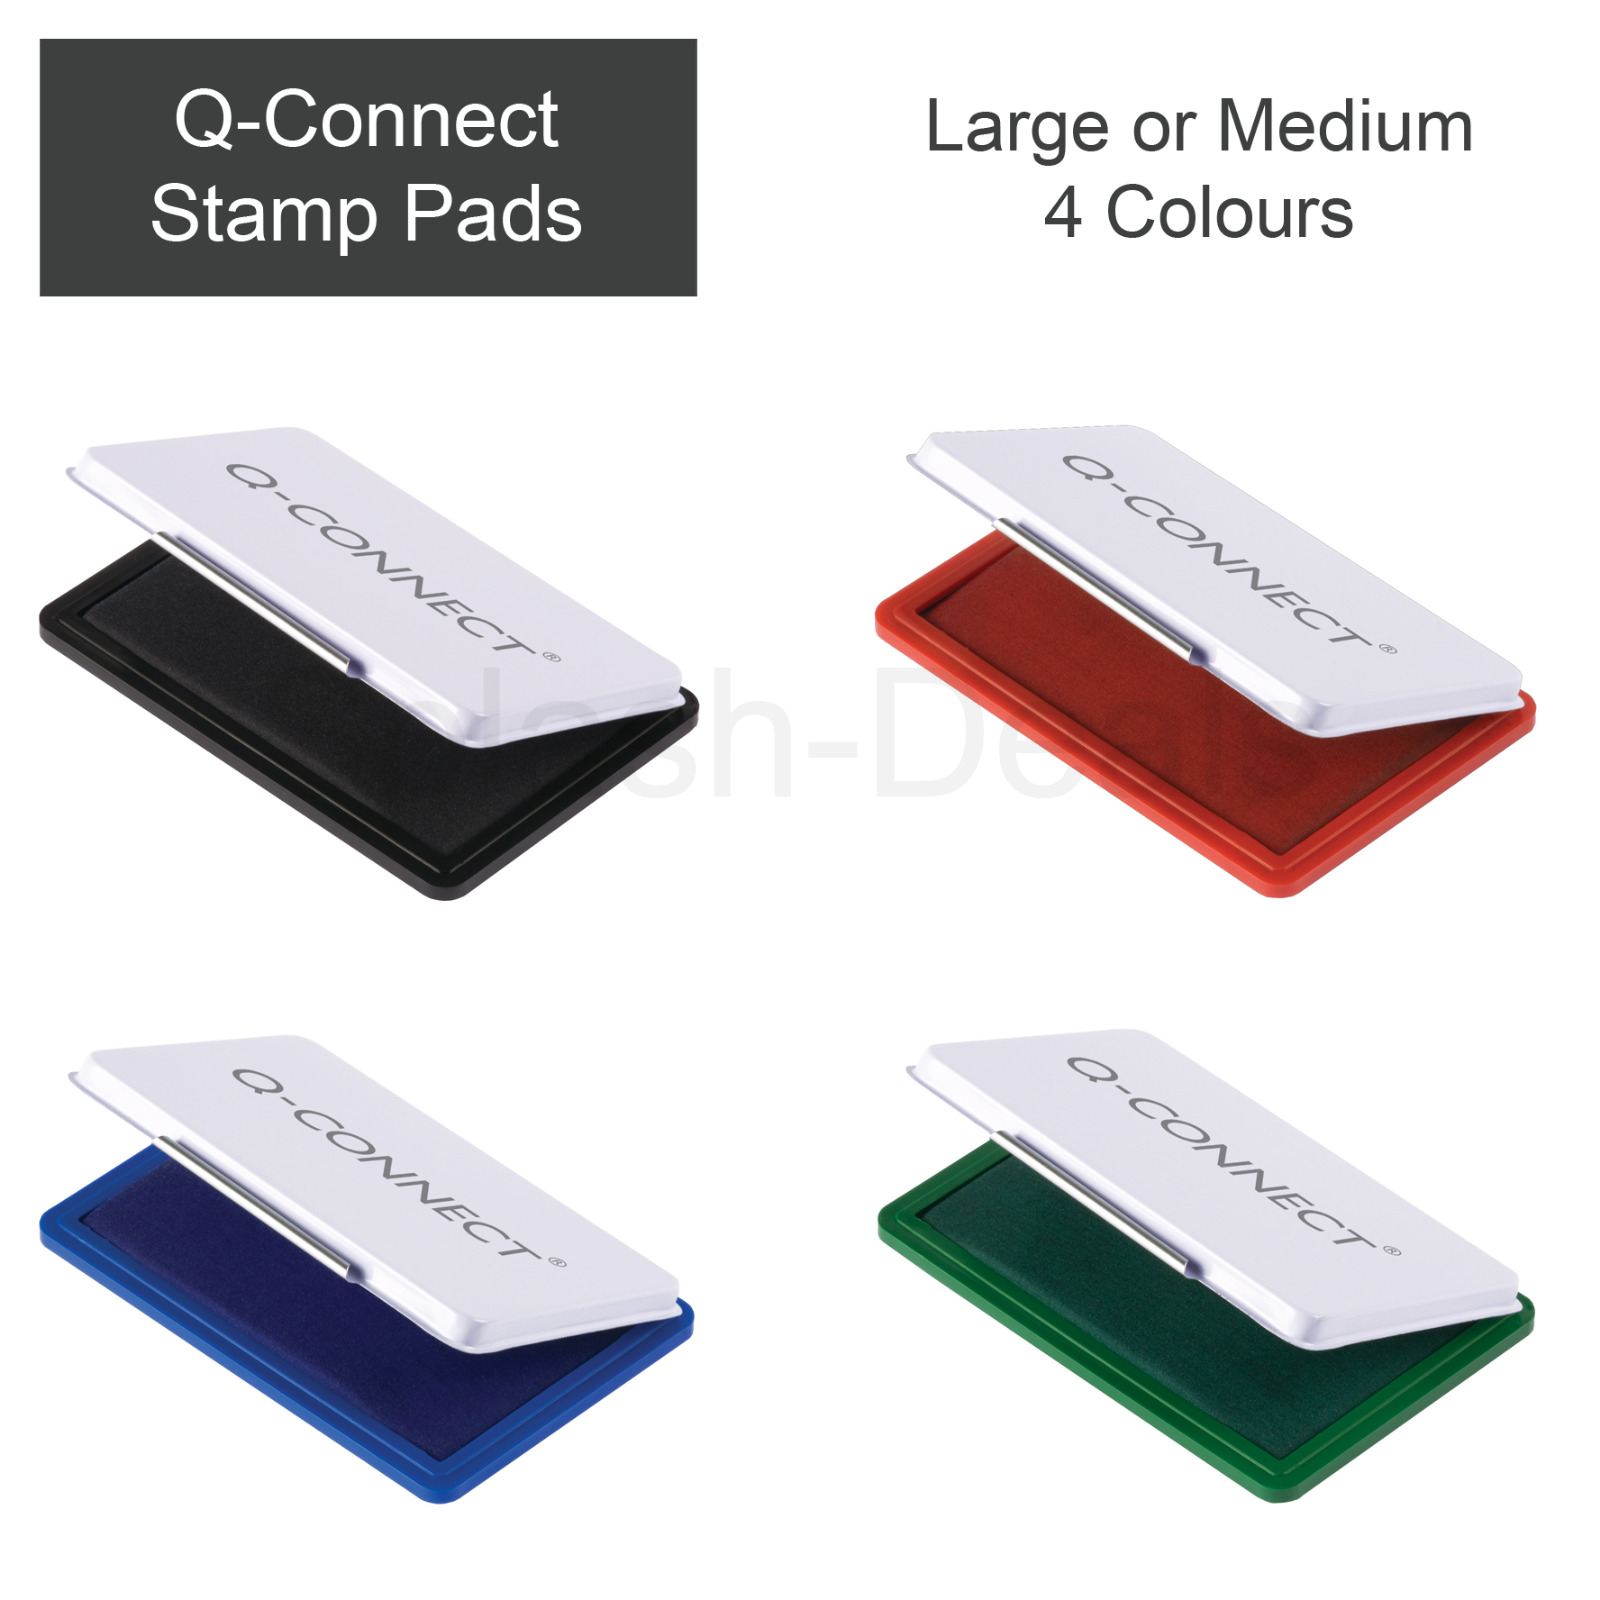 Q-Connect Medium / Large Ink Stamp Pad - Metal Case - Black, Red, Blue or Green